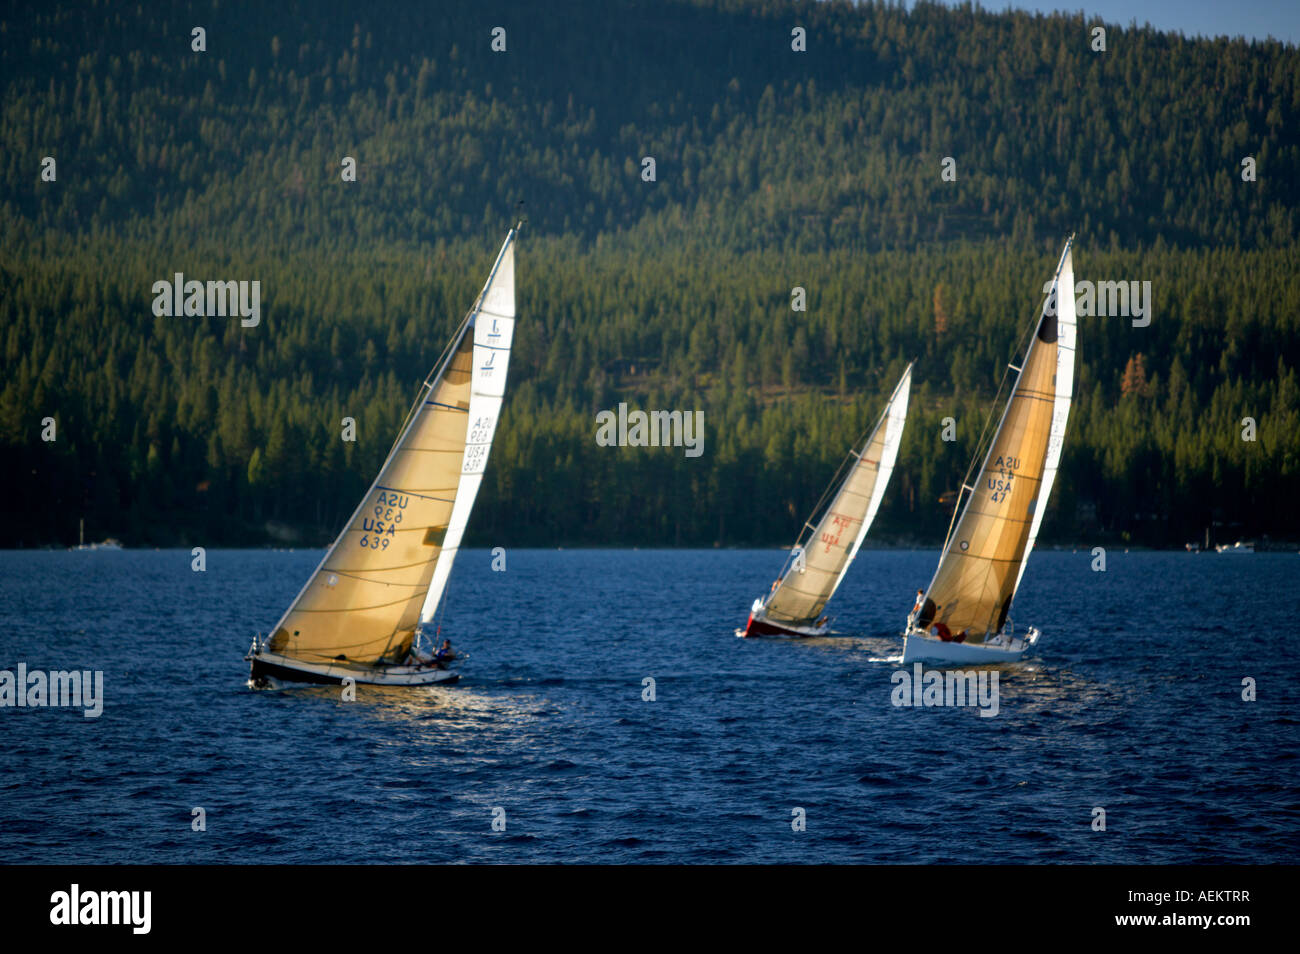 Sailboats in race Lake Tahoe California Stock Photo